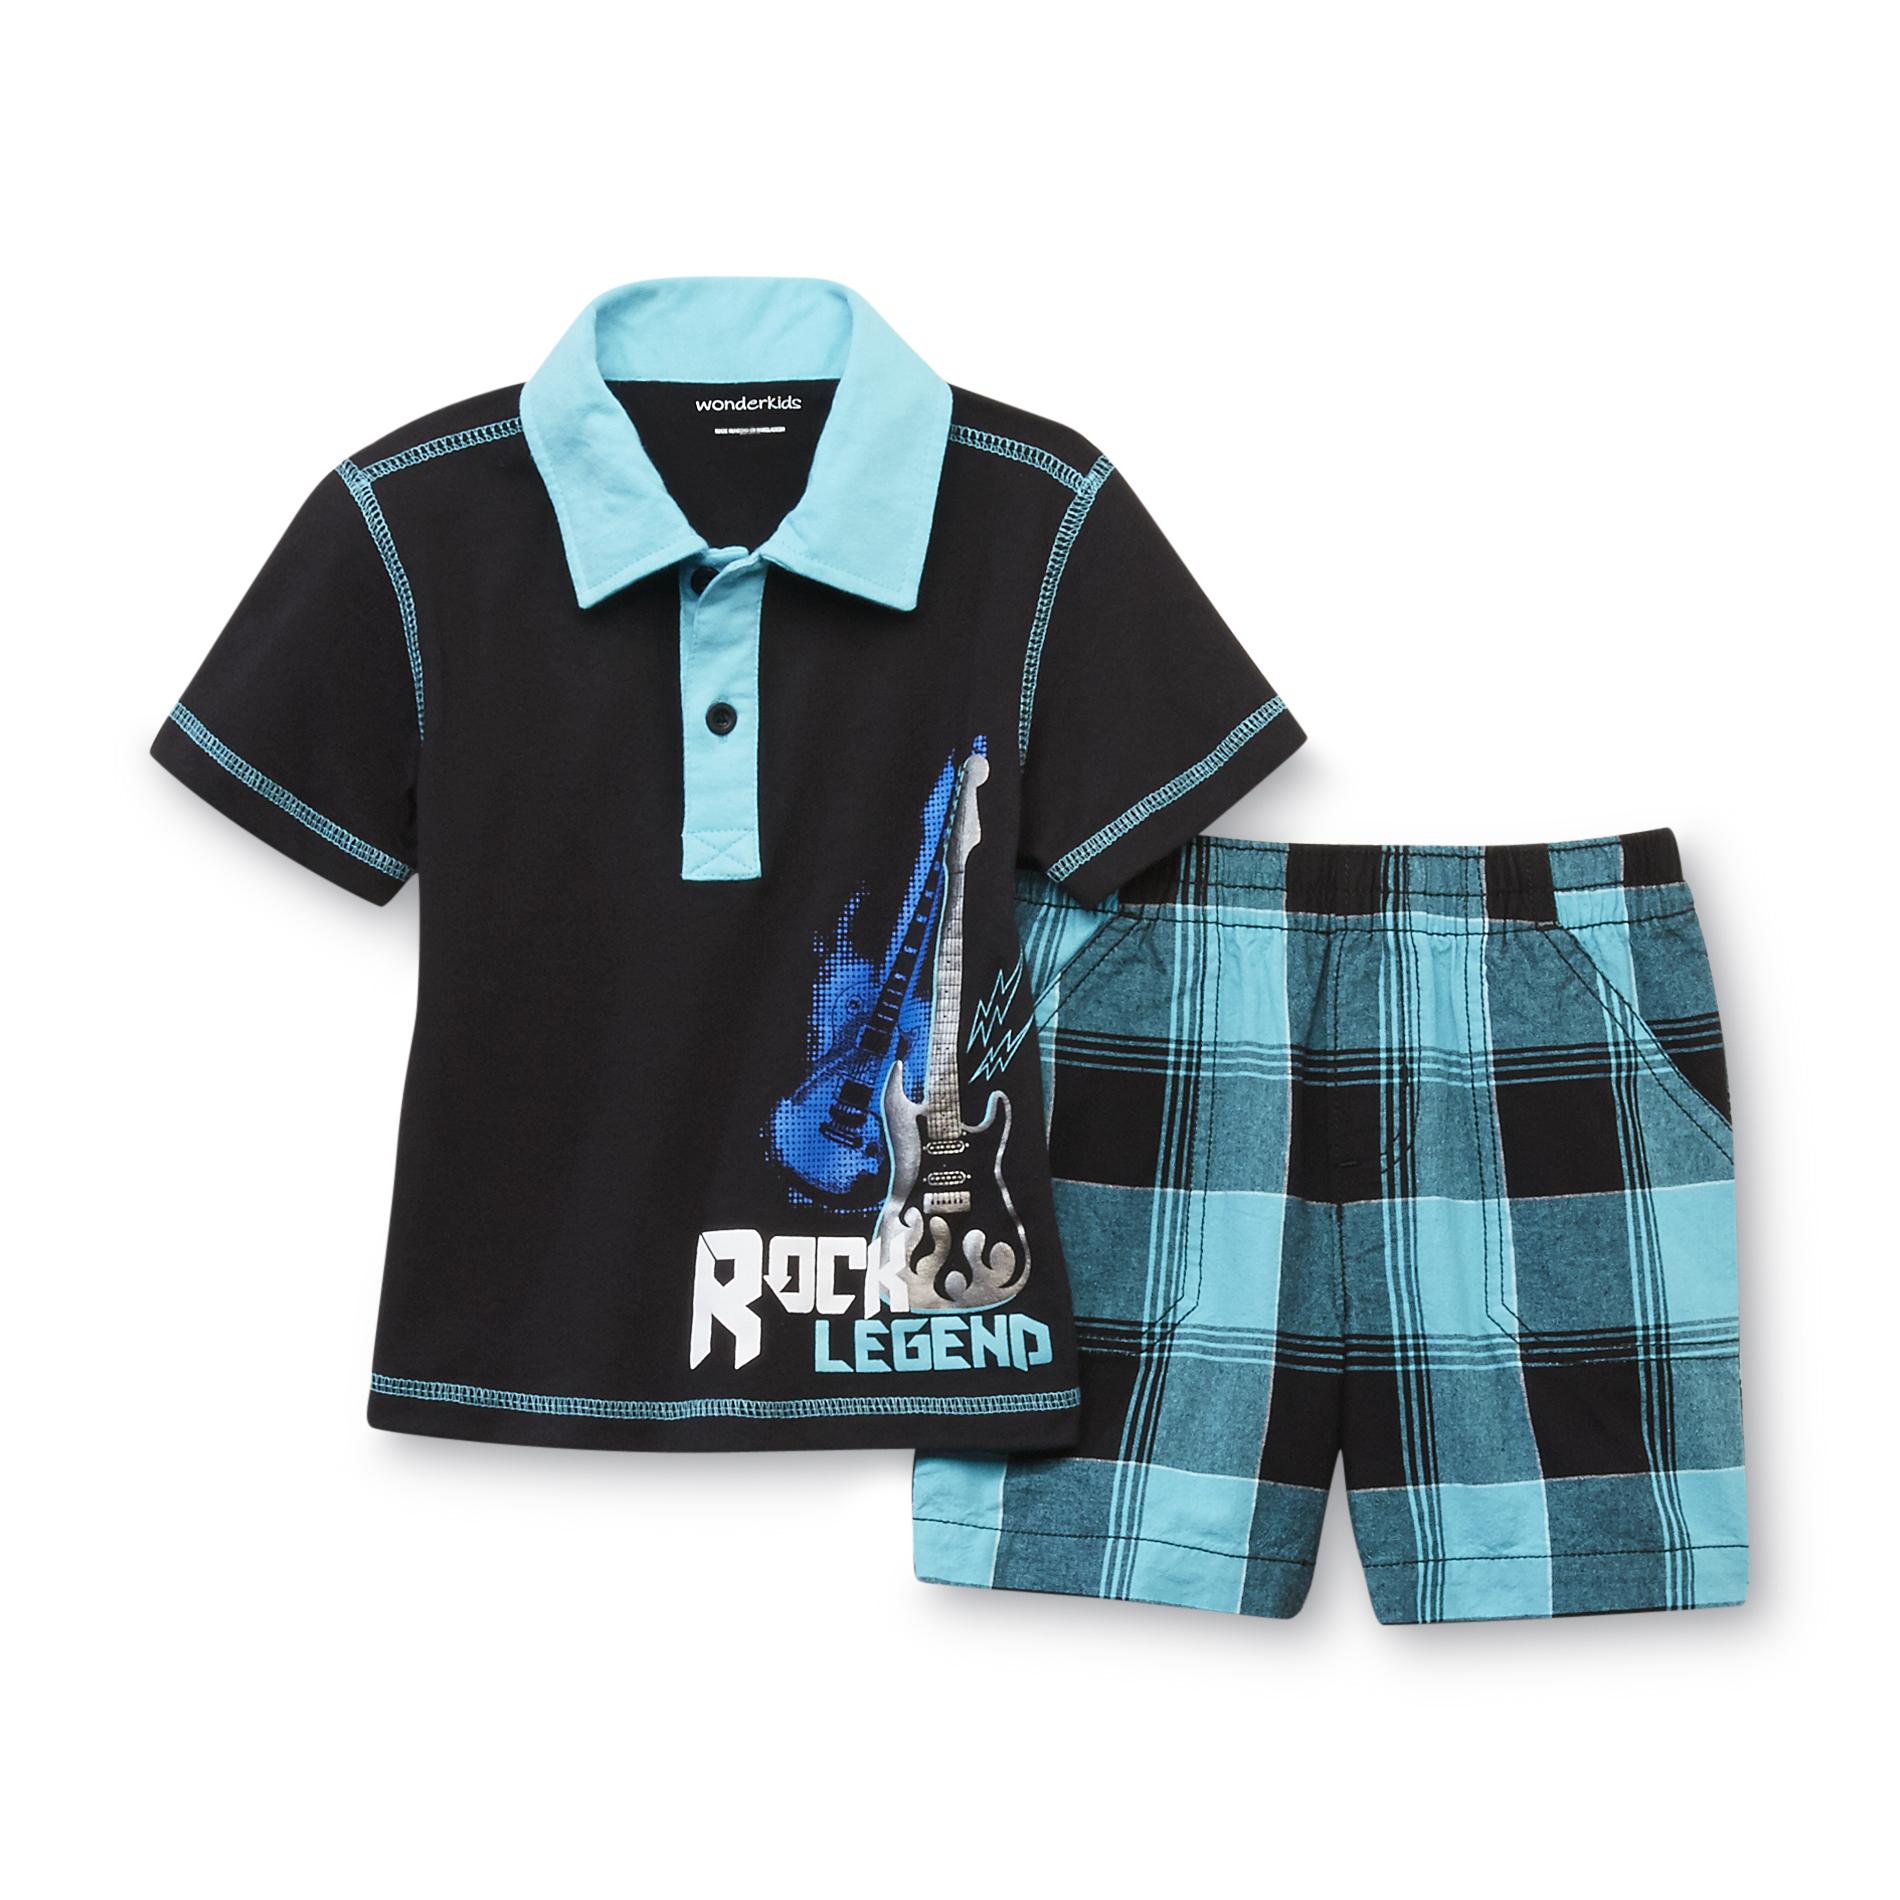 WonderKids Infant & Toddler Boy's Polo Shirt & Shorts - Guitar